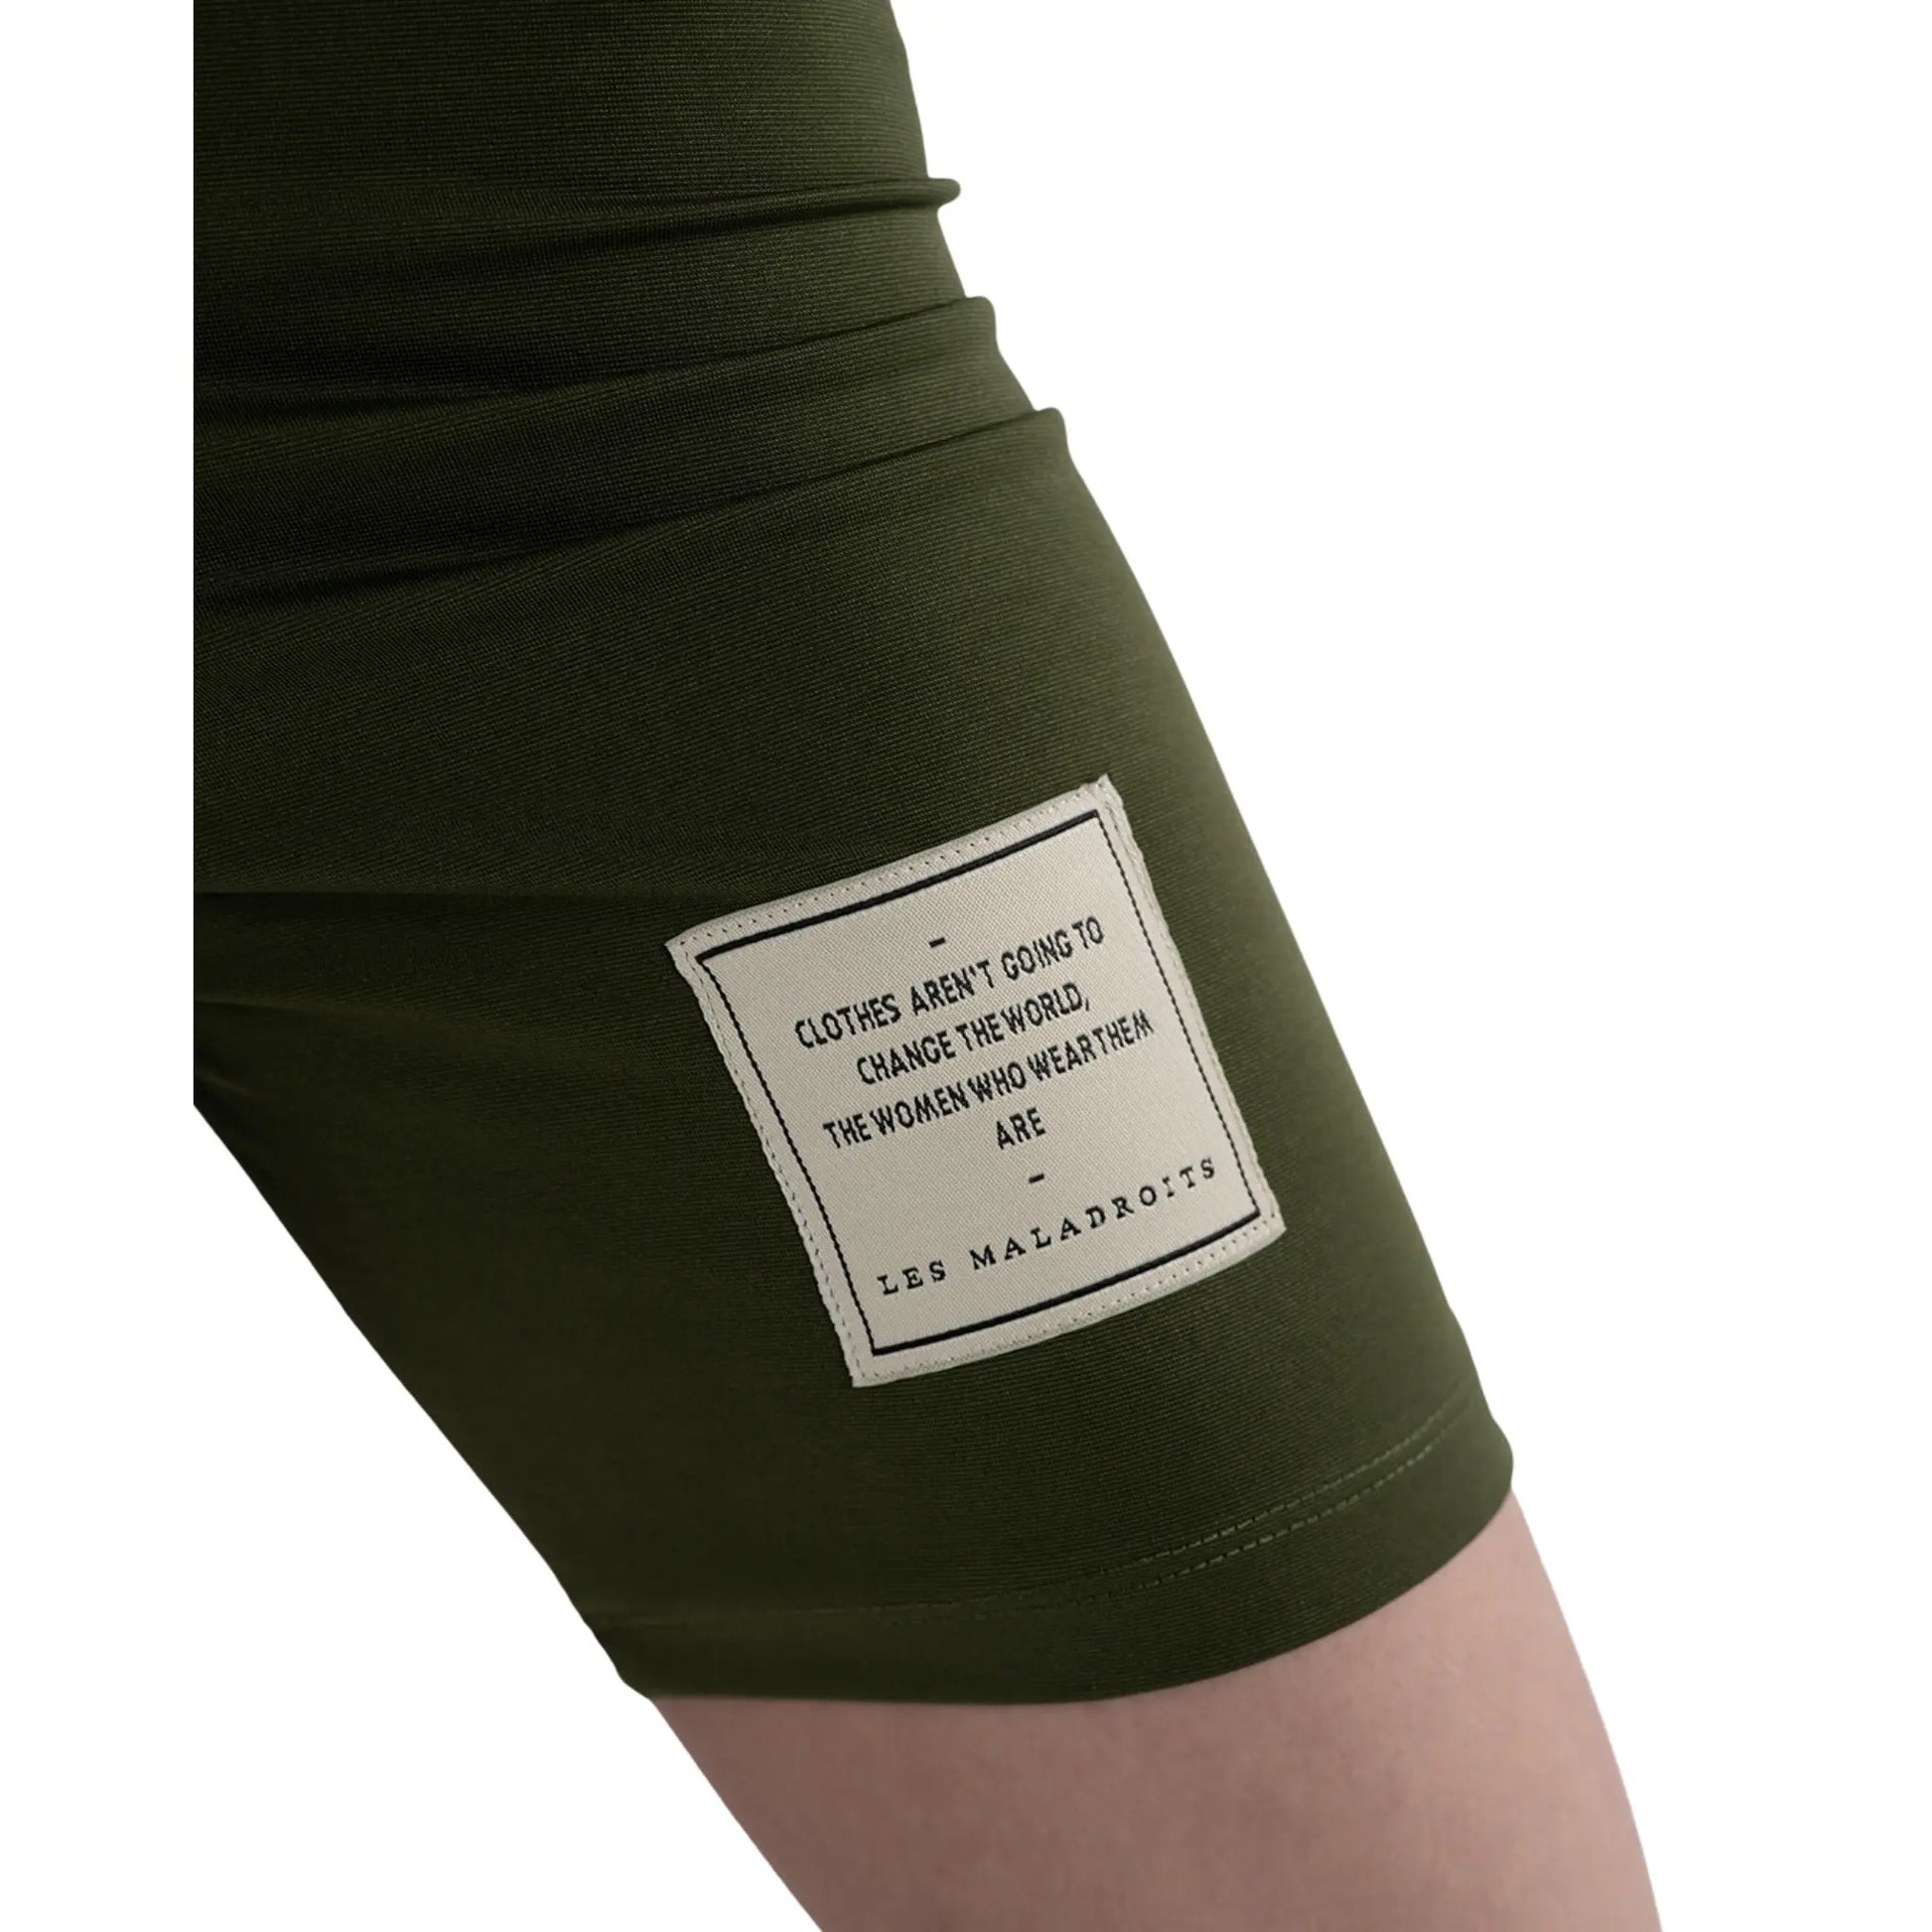 LES MALADROITS Crop Top & Biker Shorts Set Olive Green close view on short